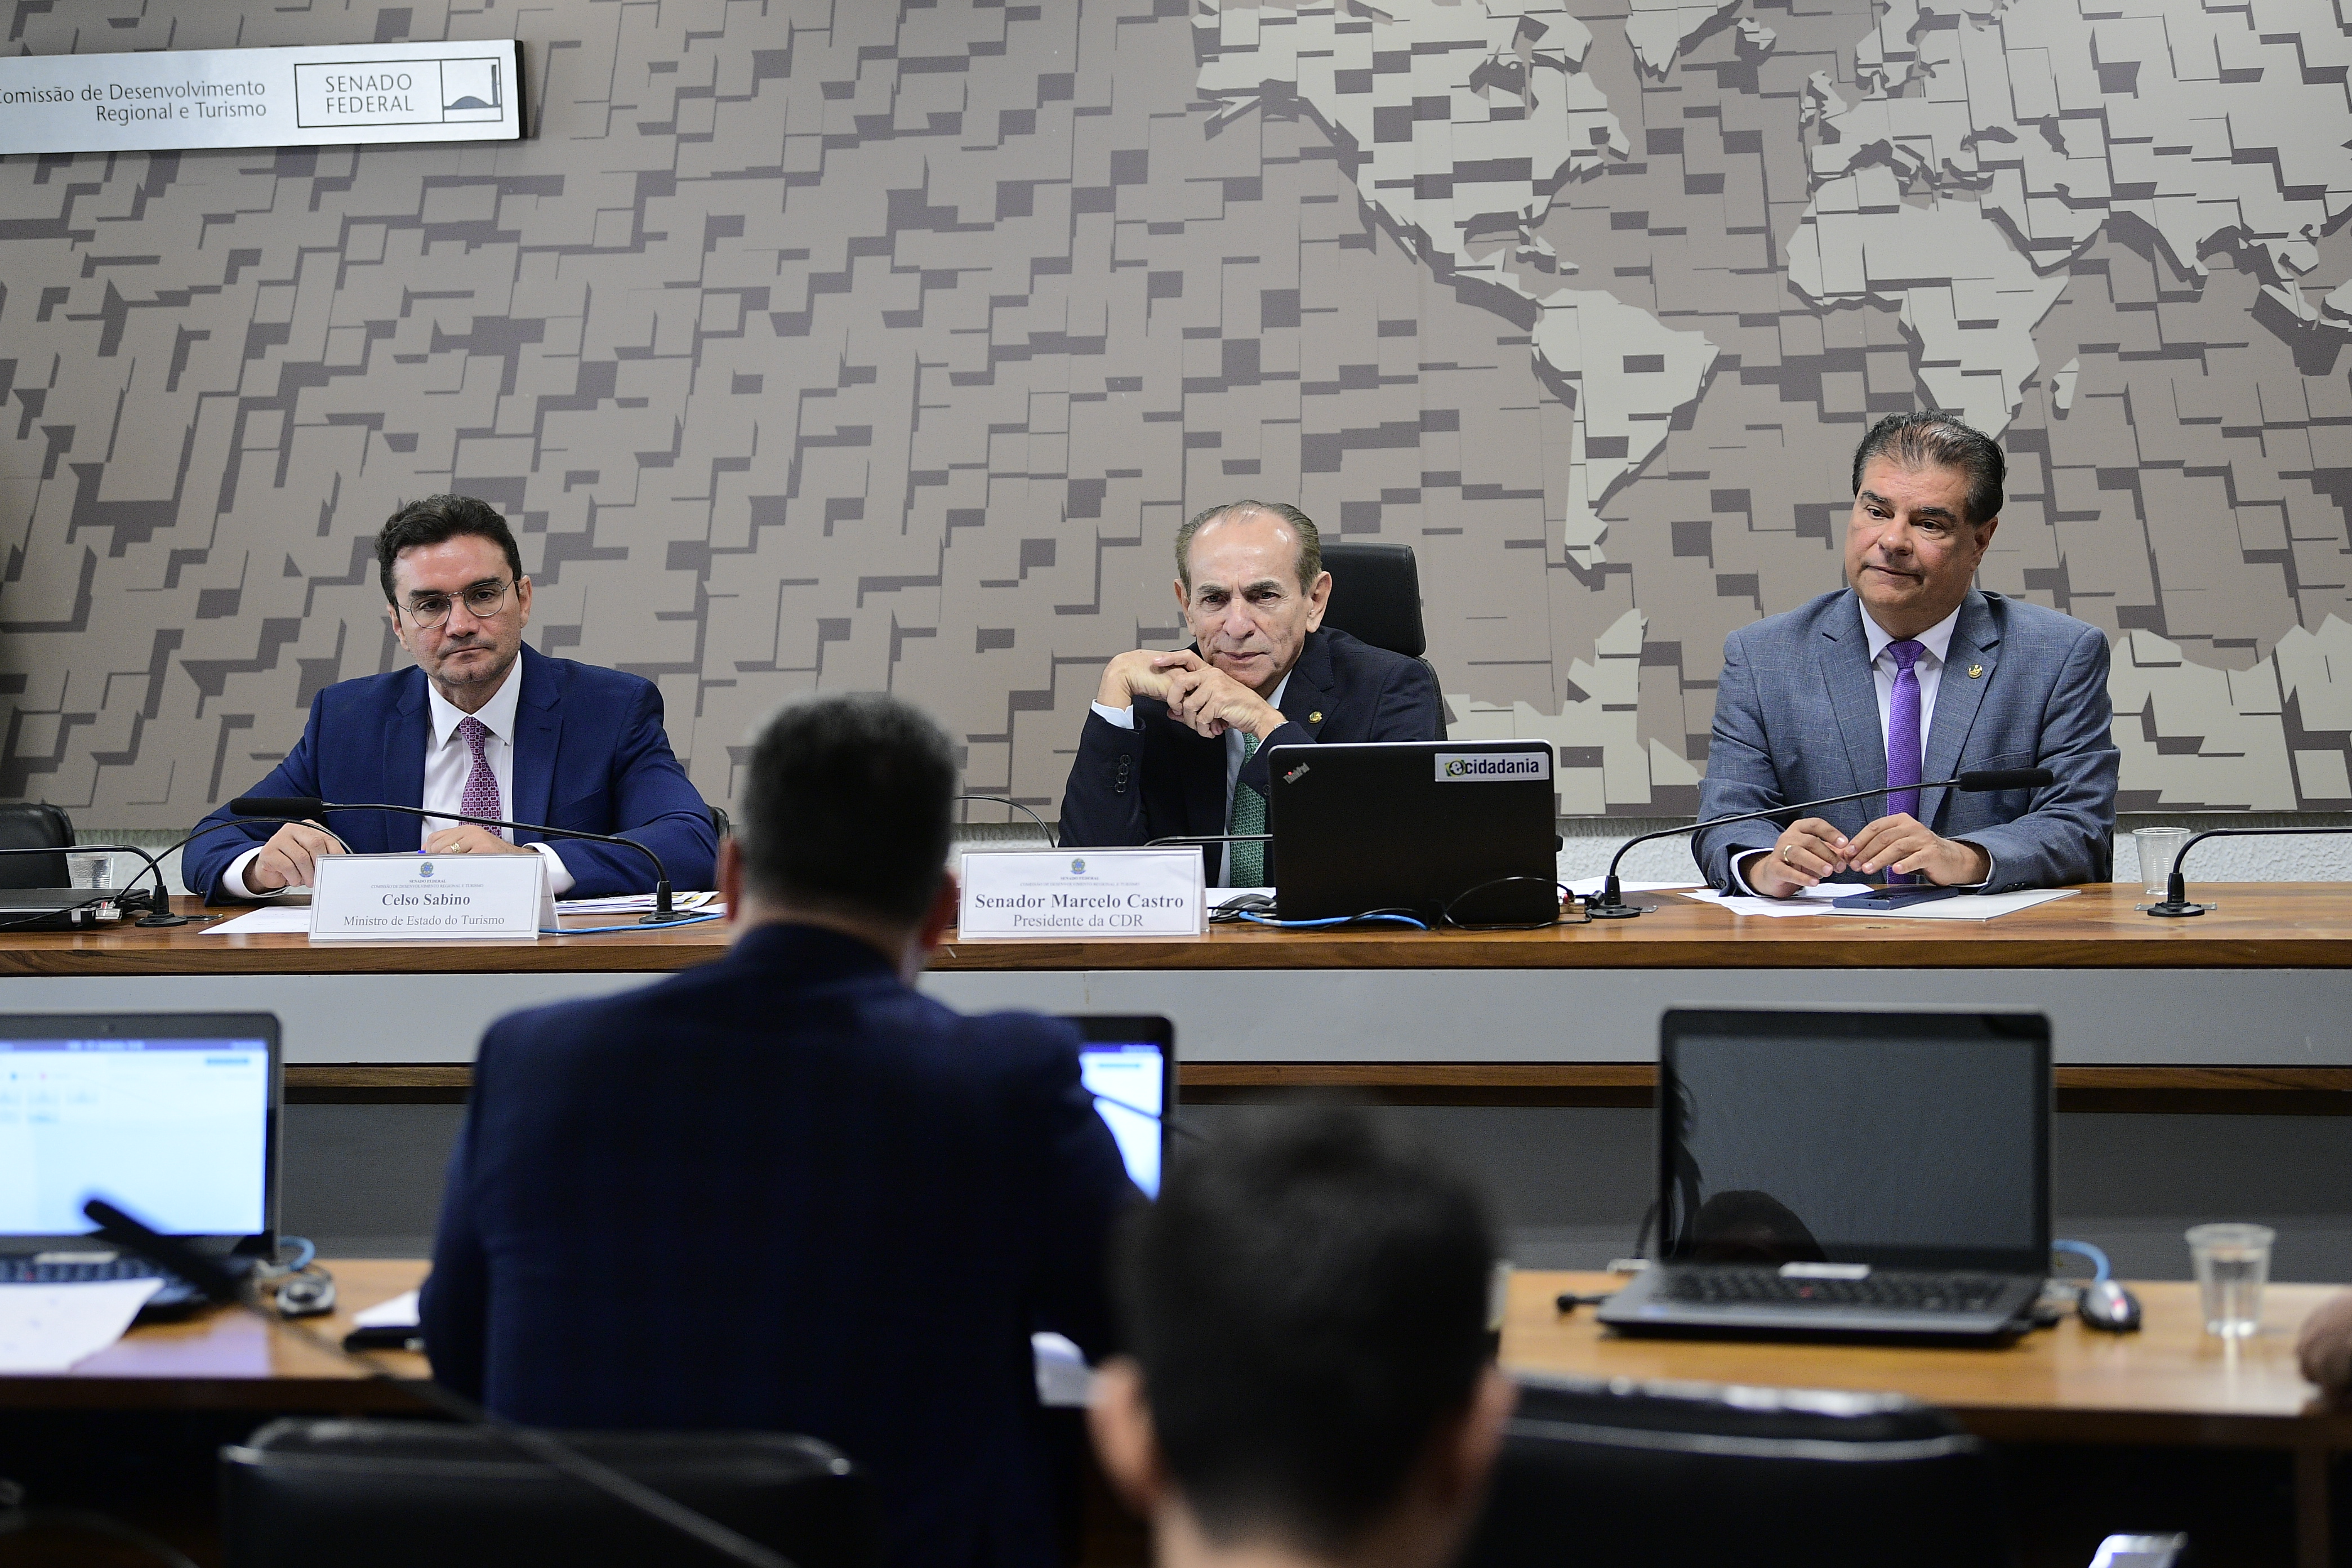 Mesa:
ministro de Estado do Turismo, Celso Sabino;
presidente da CDR, senador Marcelo Castro (MDB-PI);
senador Nelsinho Trad (PSD-MS).